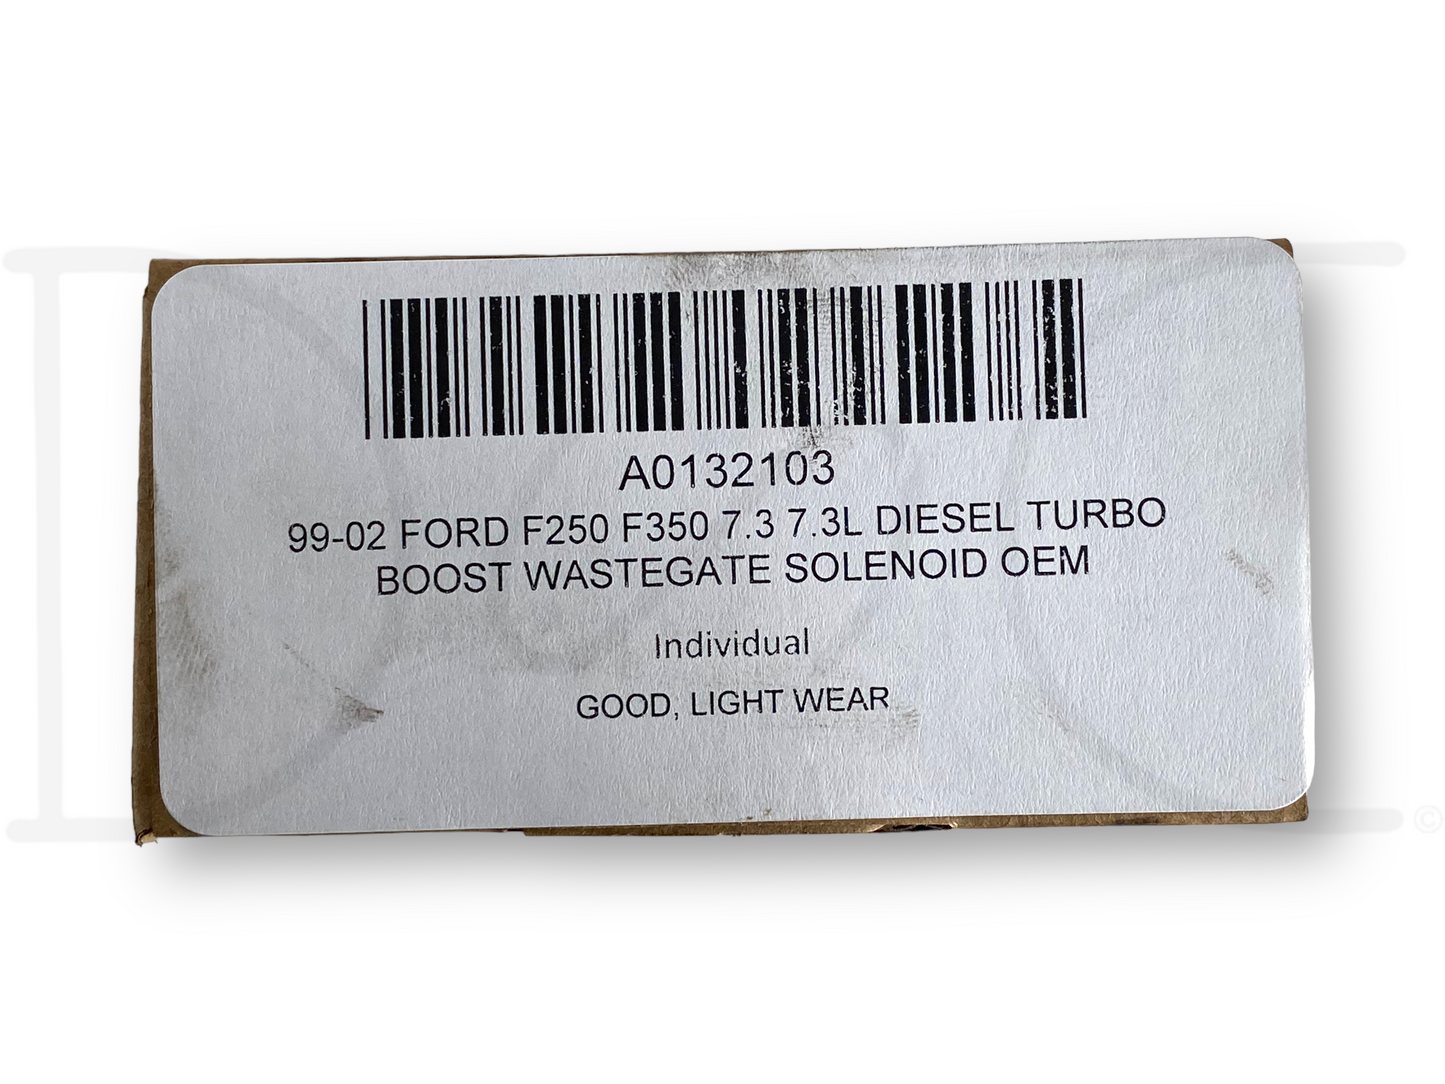 99-02 Ford F250 F350 7.3 7.3L Diesel Turbo Boost Wastegate Solenoid OEM